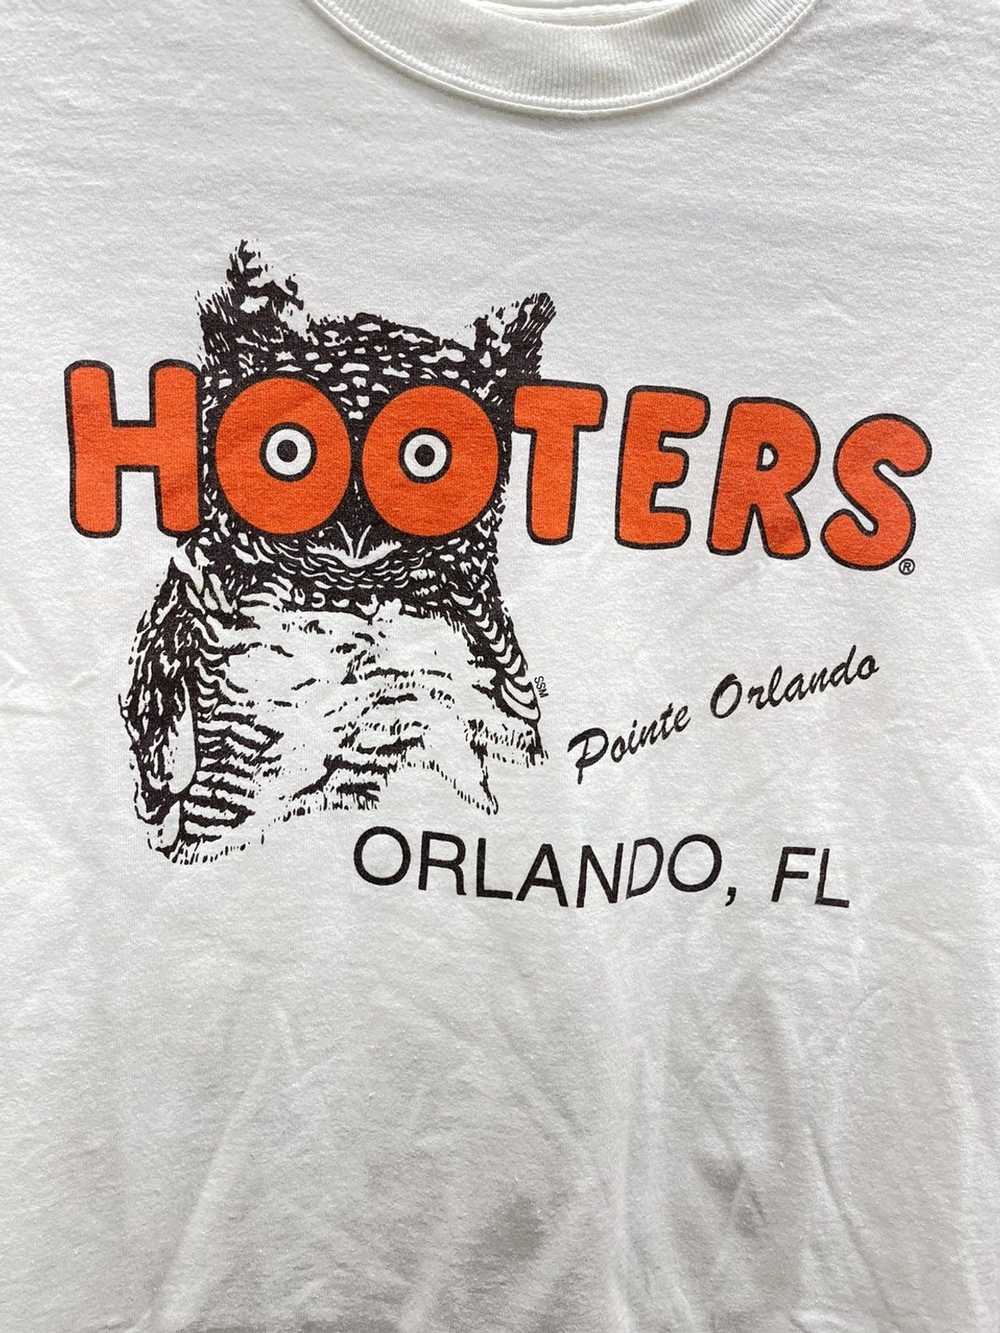 Vintage VTG hOOters graphic shirt Orlando Florida - image 2